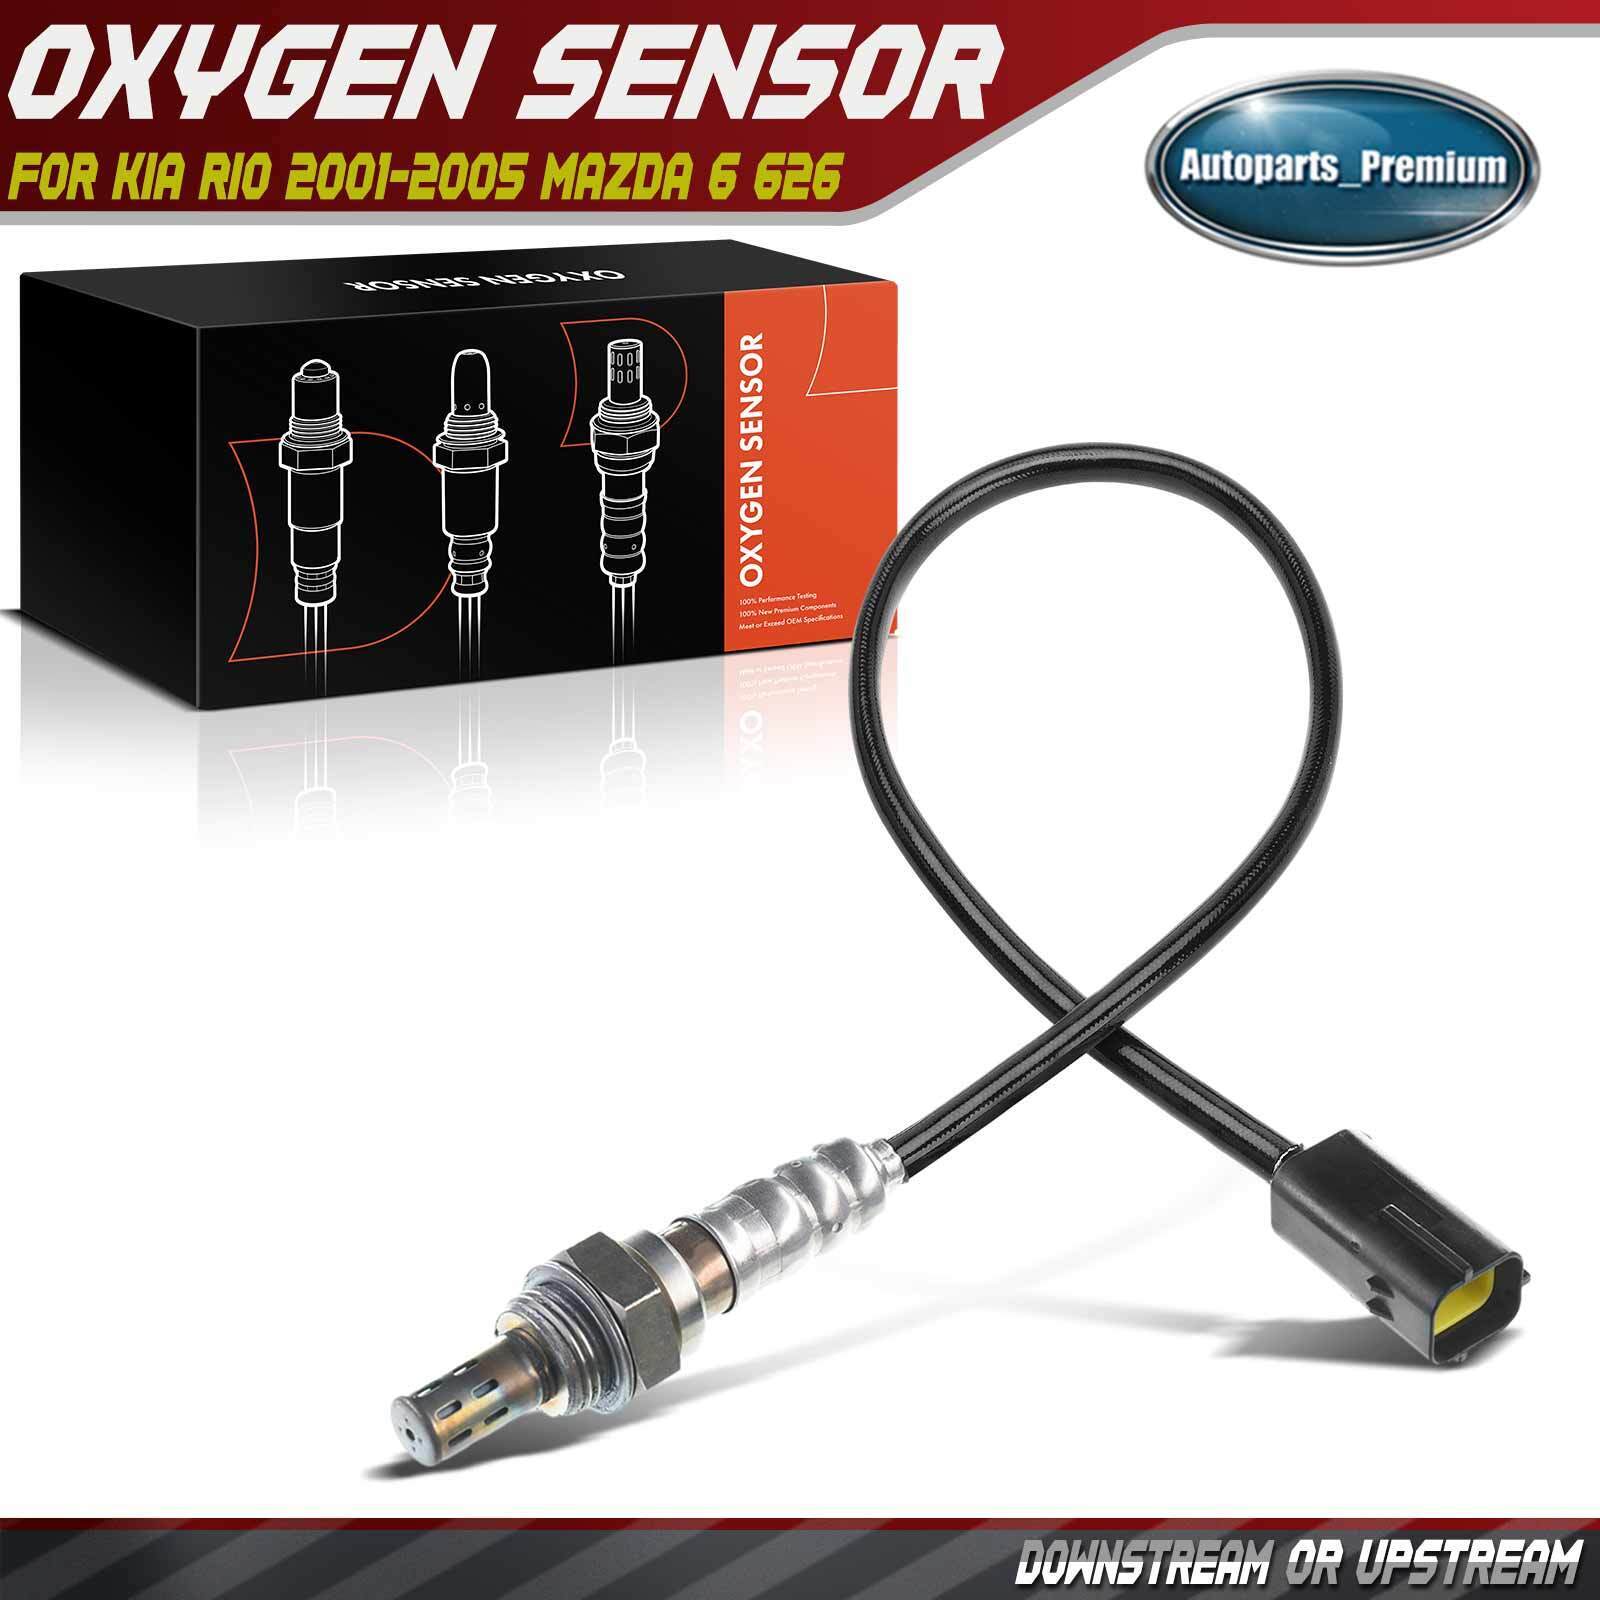 Oxygen Sensor for Kia Rio 01-05 Mazda 6 626 Forenza 2004-2005 Verona 2004-2005